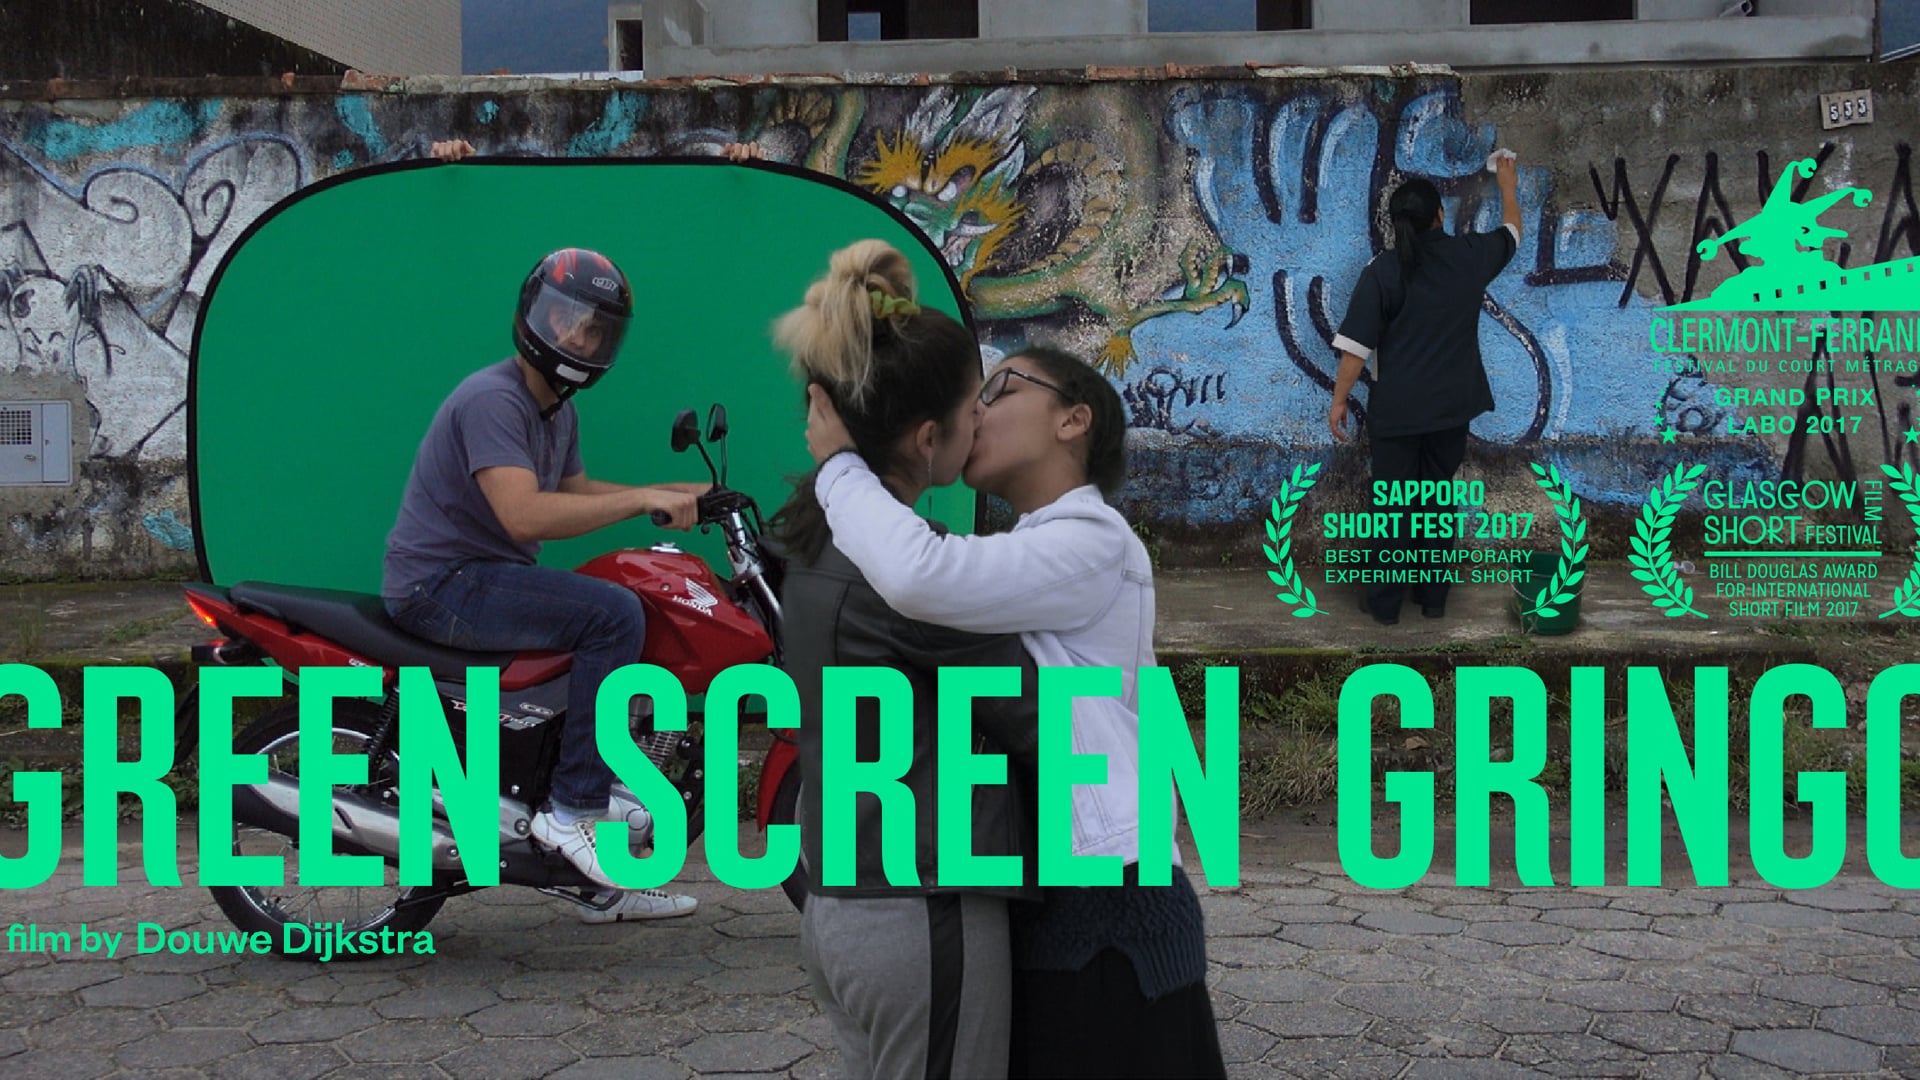 Green Screen Gringo